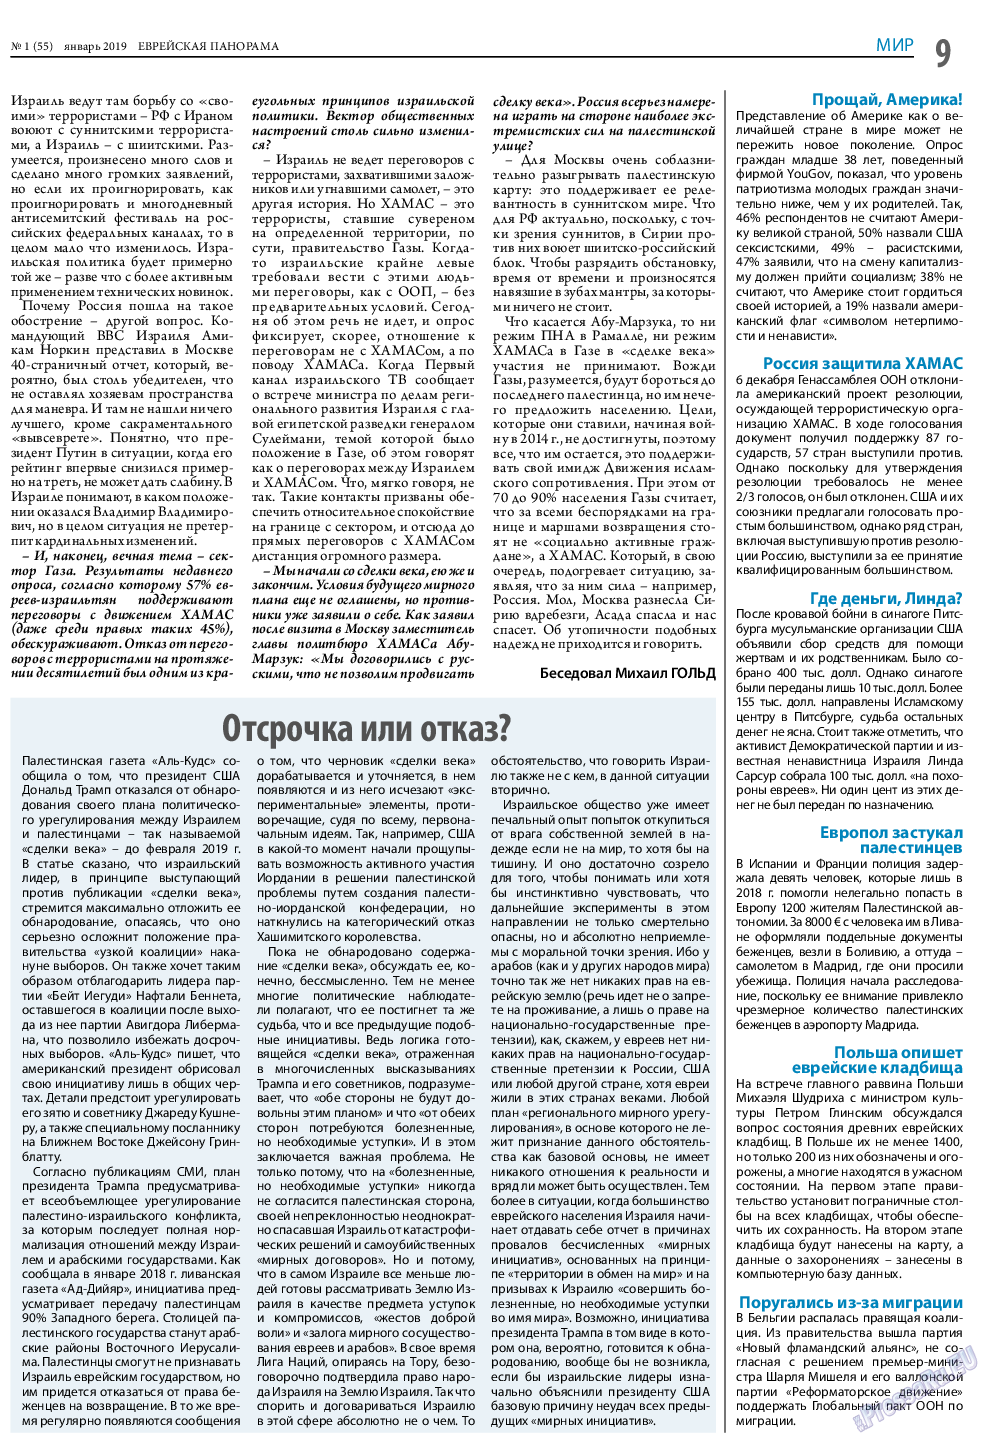 Еврейская панорама, газета. 2019 №1 стр.9